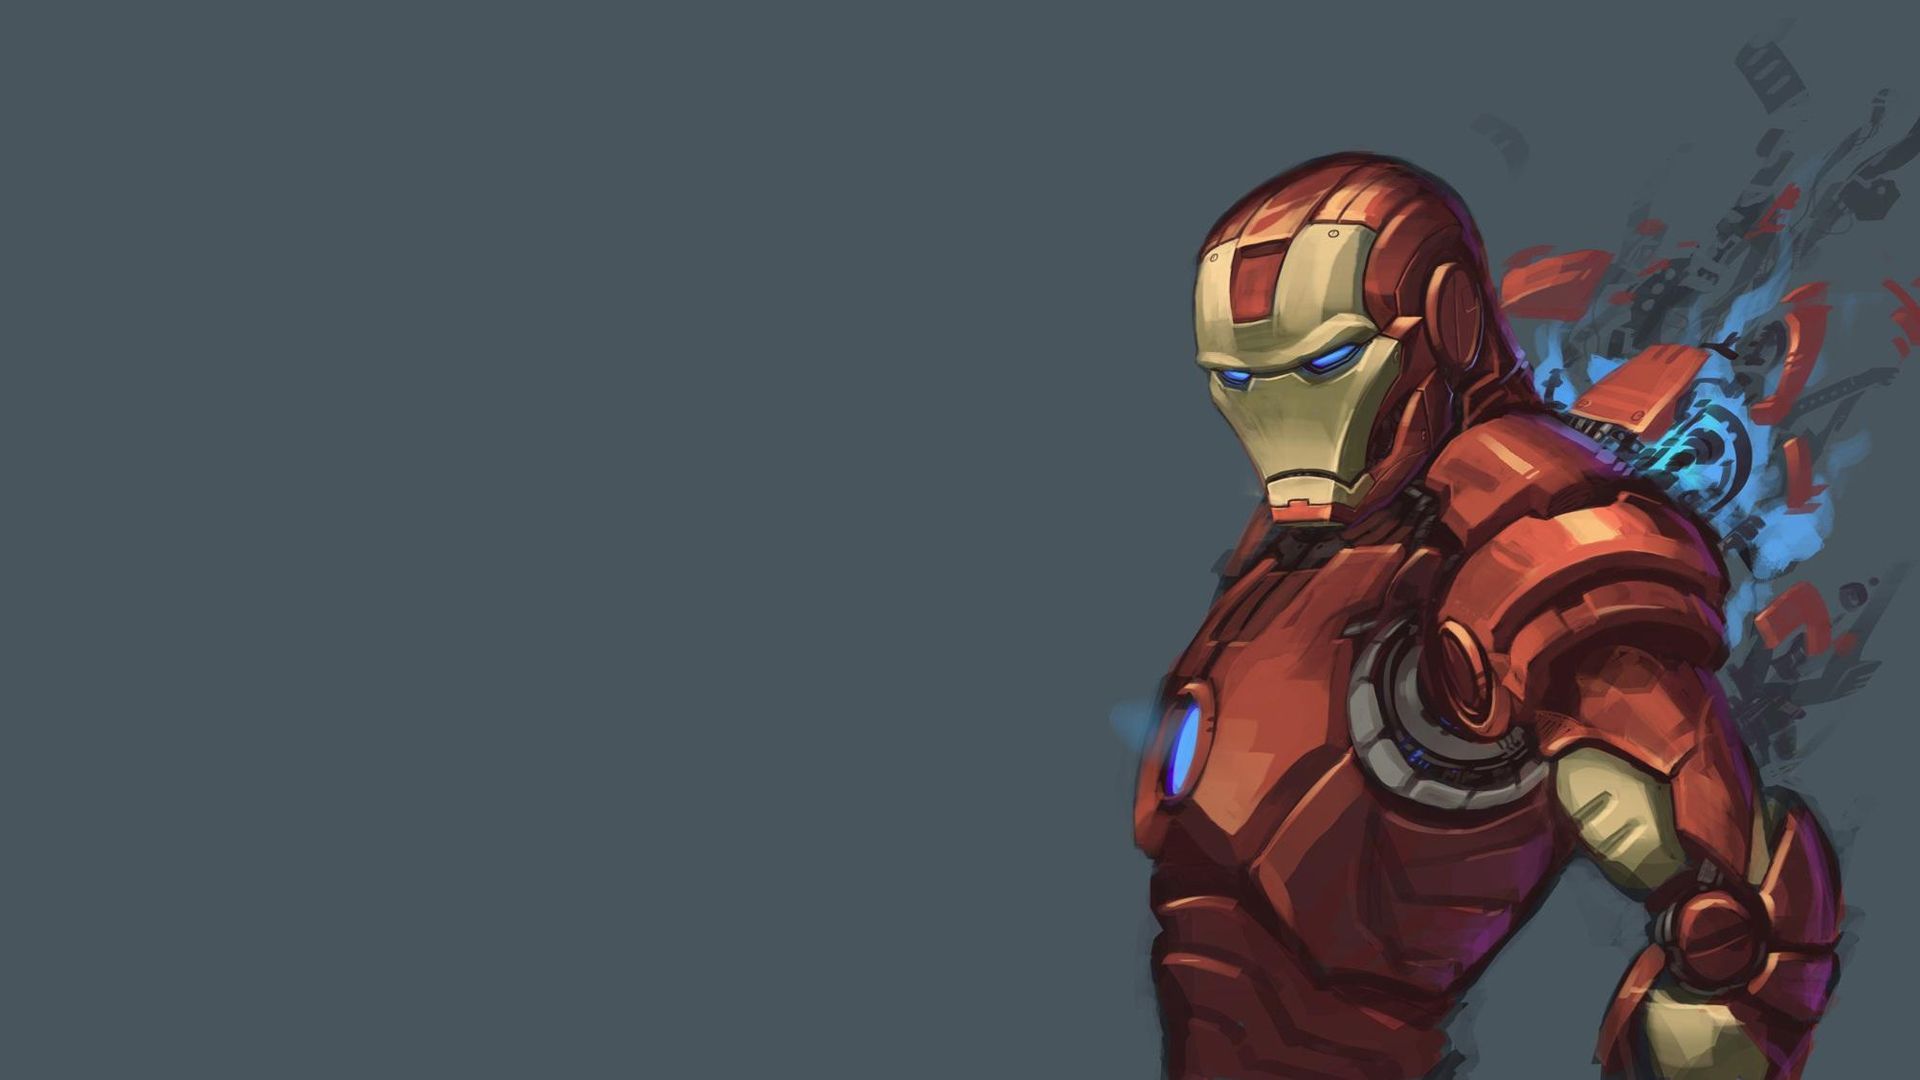 Iron Man comic cartoon wallpapers | Wallpapers, Backgrounds ...